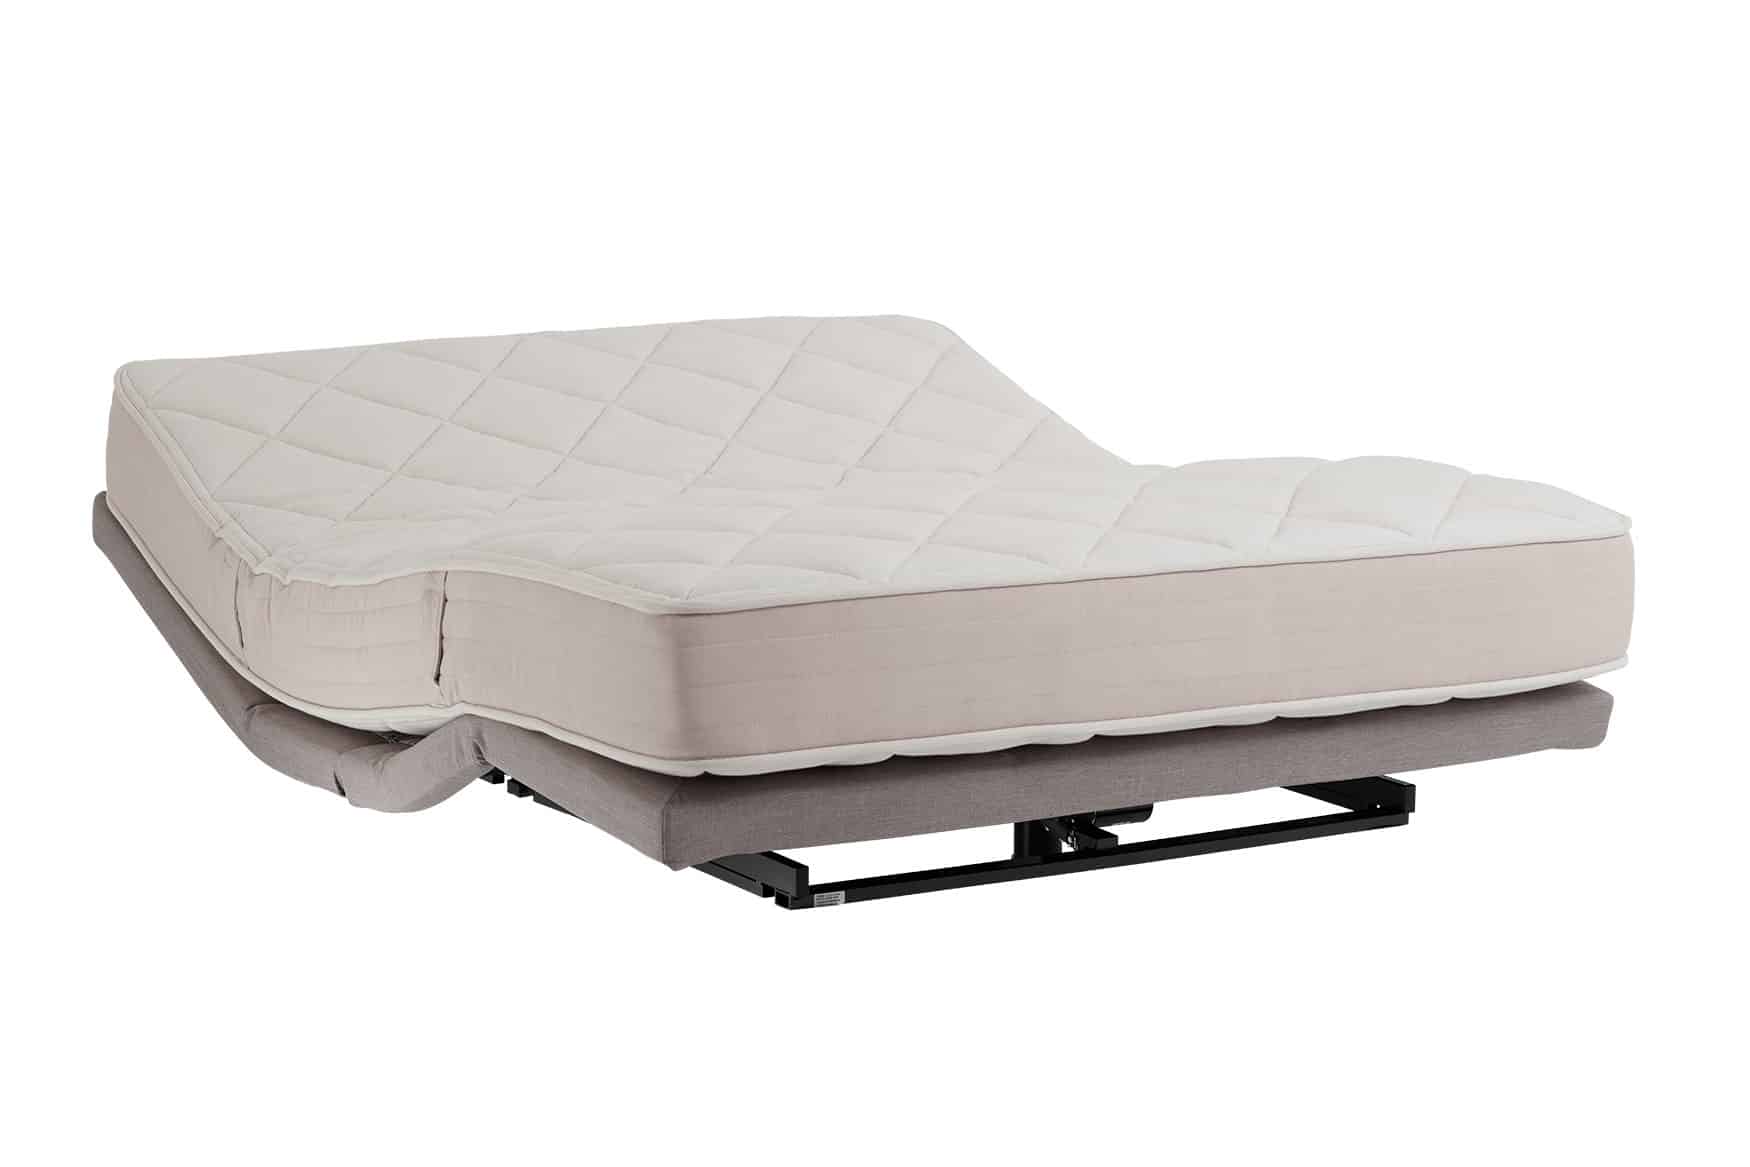 Custom Comfort A-200 – Low-Profile Wireless Adjustable Bed